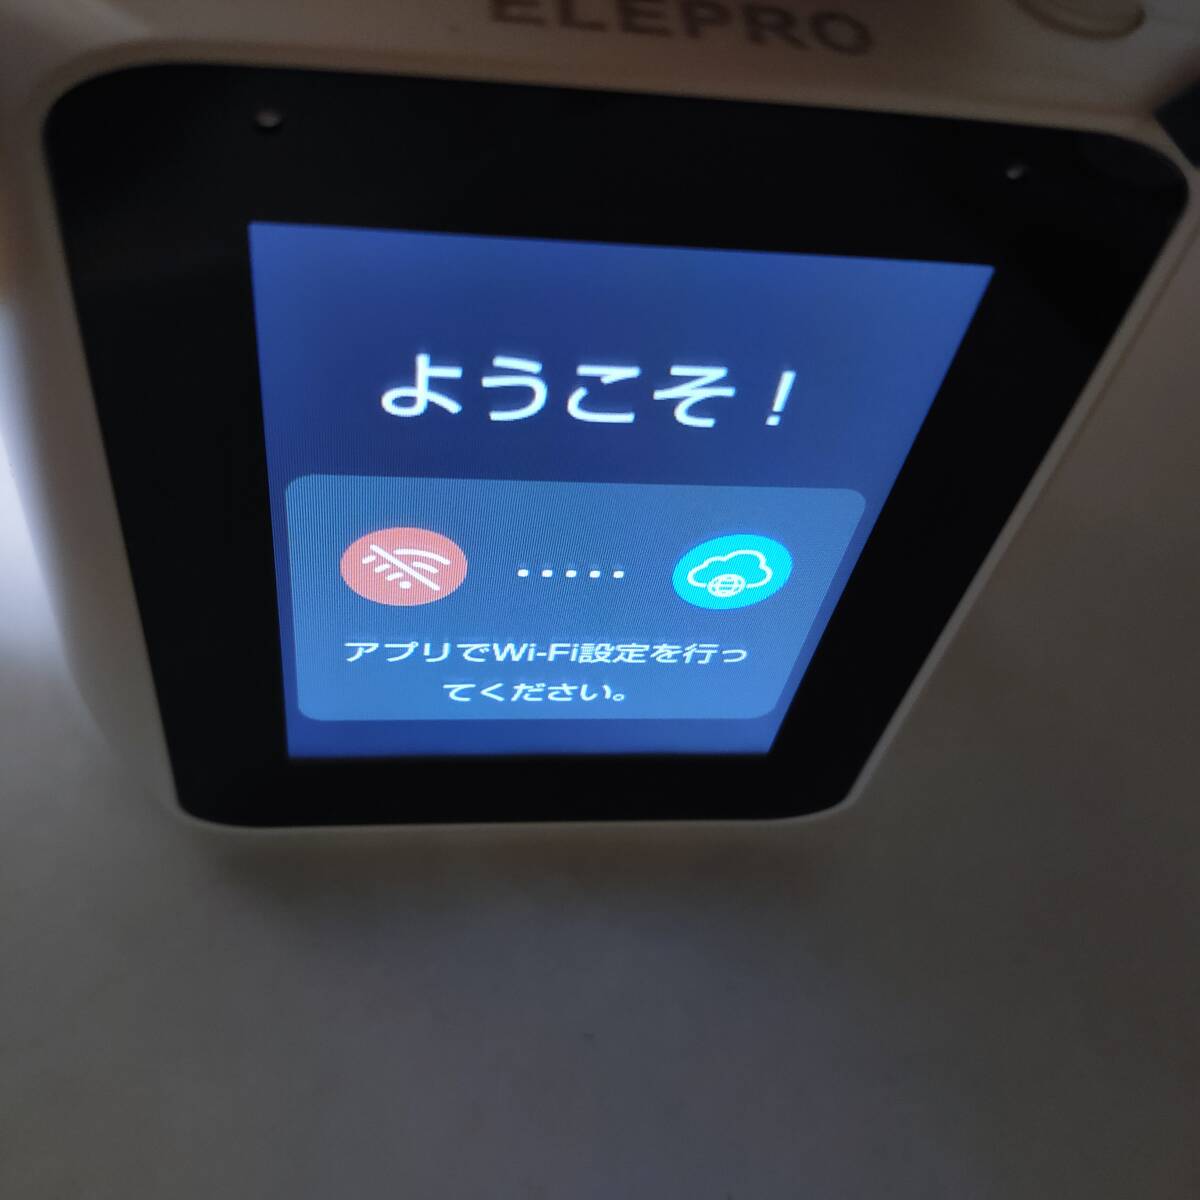 [ один иен старт ]ELEPRO видео телефонный разговор Smart камера видеть защита камера V3[1 иен ]AKI01_2590